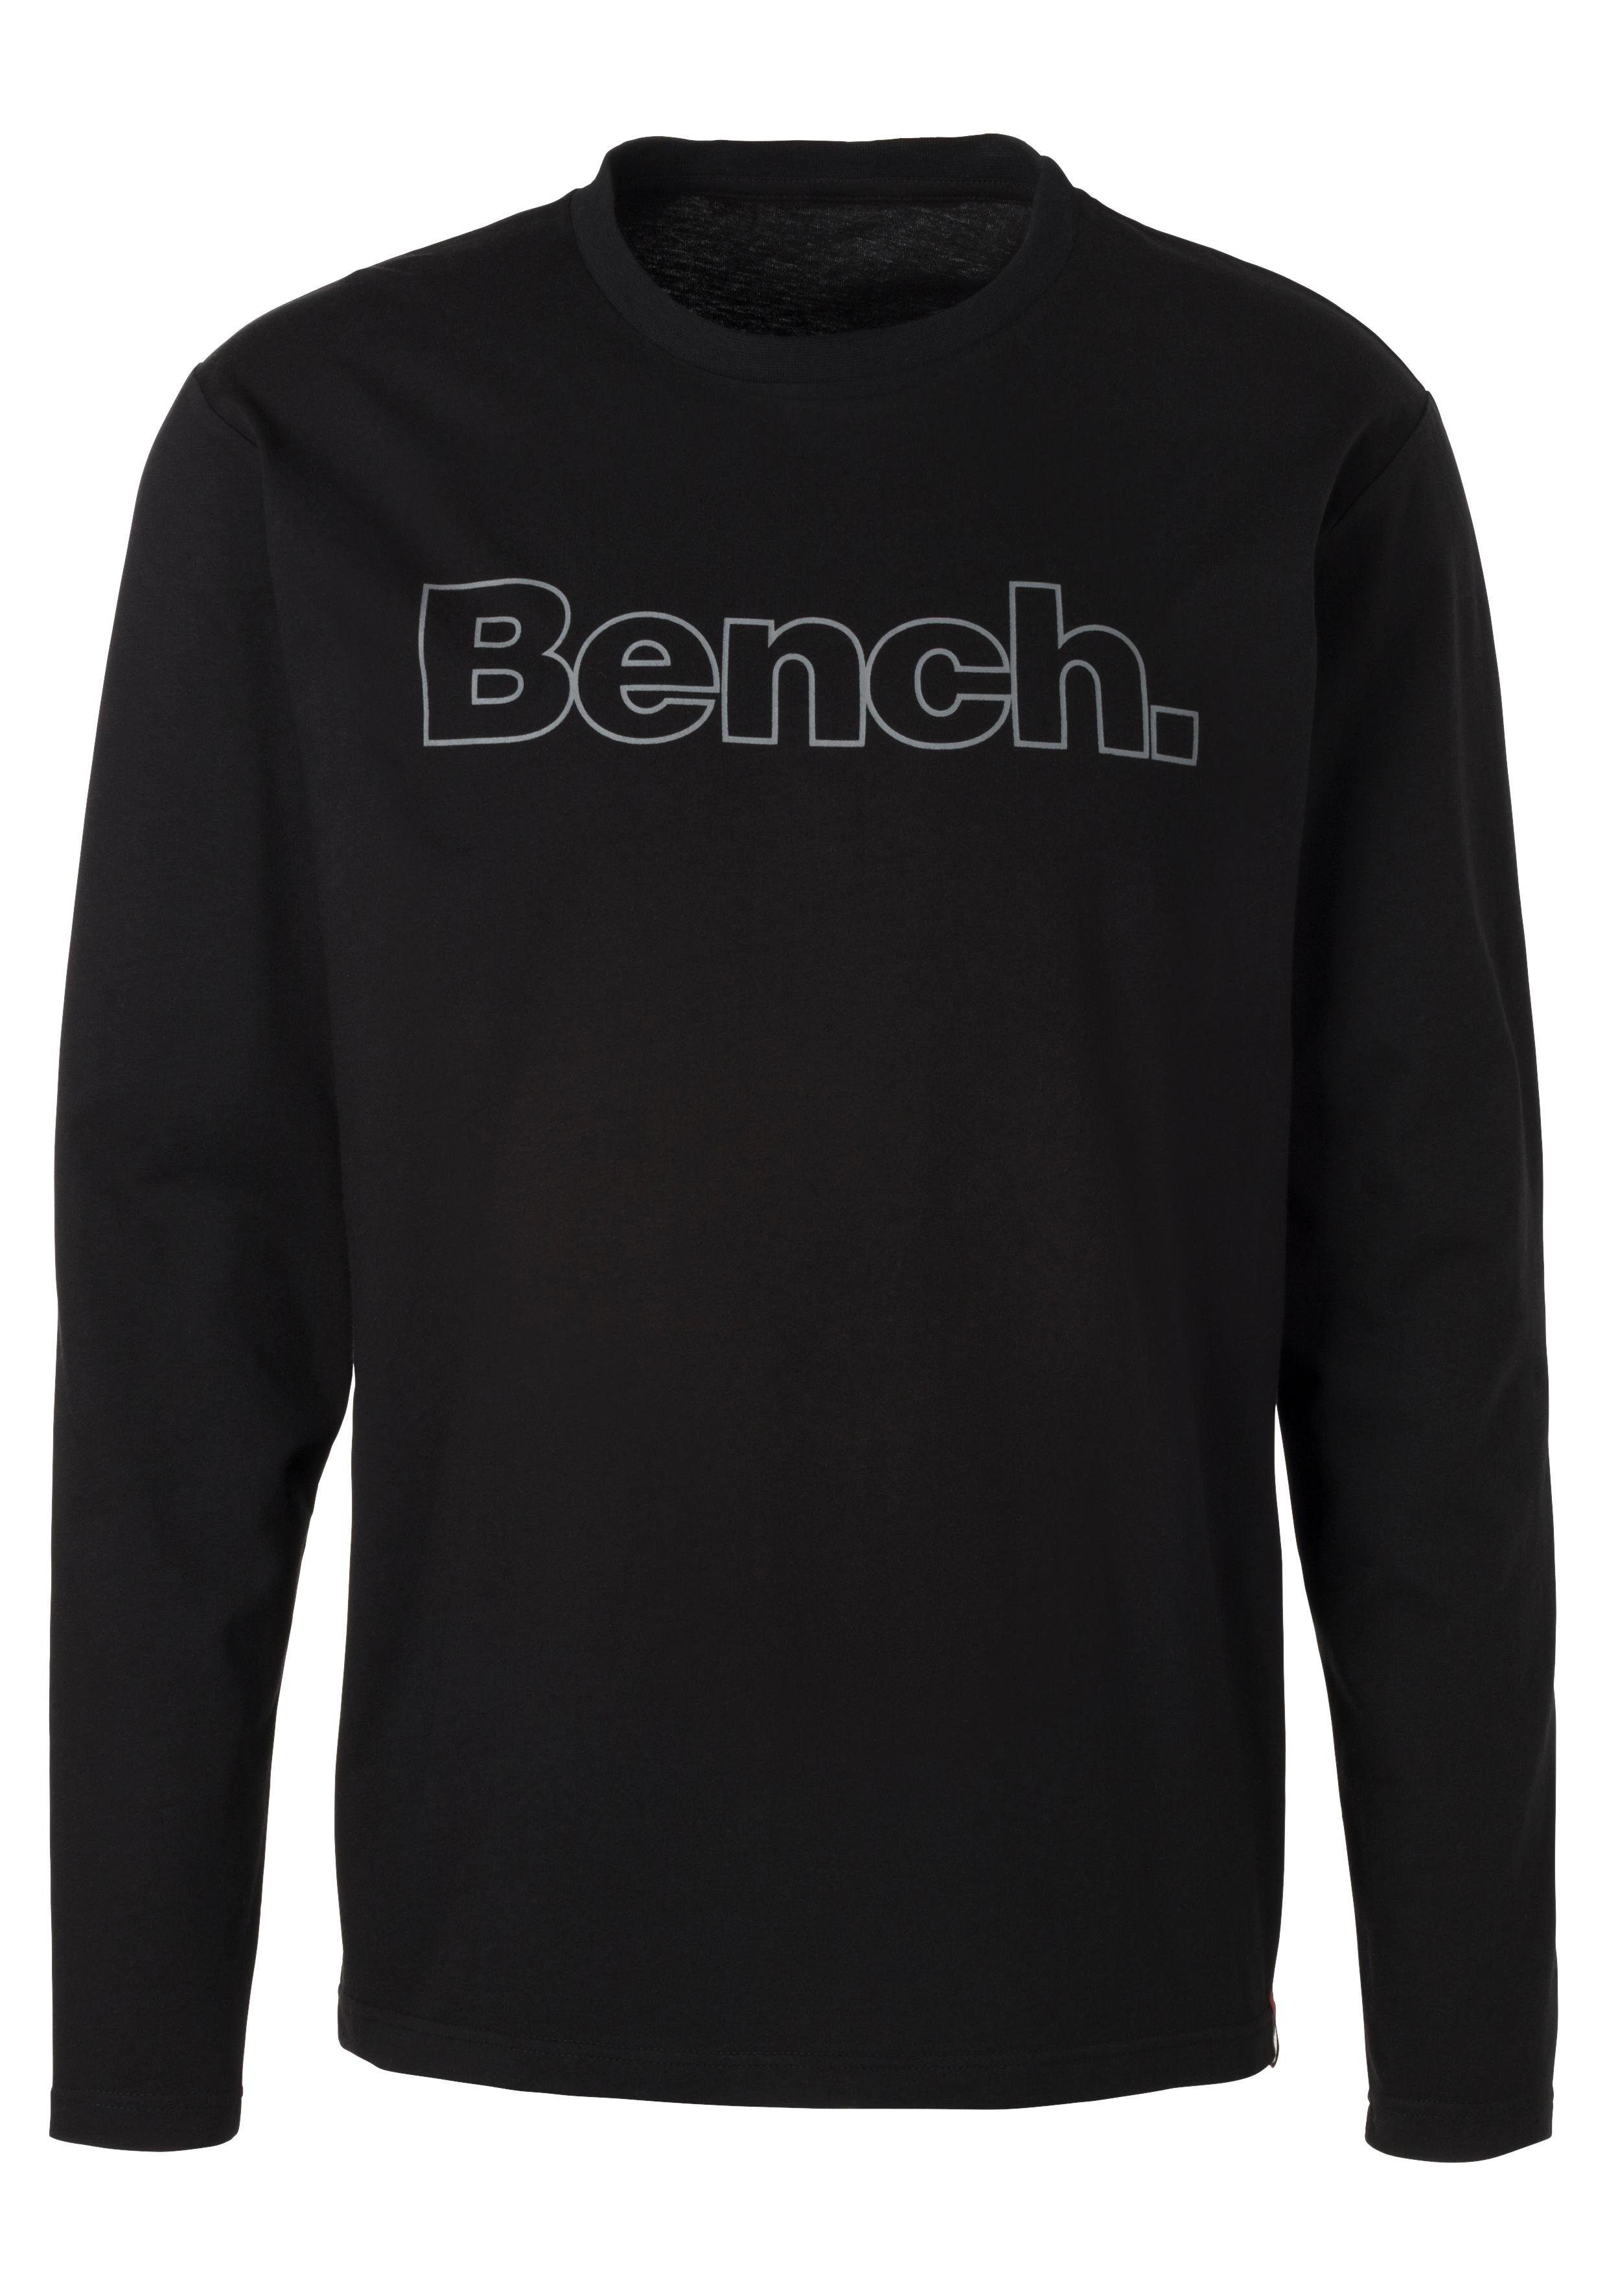 Bench. Loungewear petrol, vorn Langarmshirt (2-tlg) Bench. schwarz mit Print